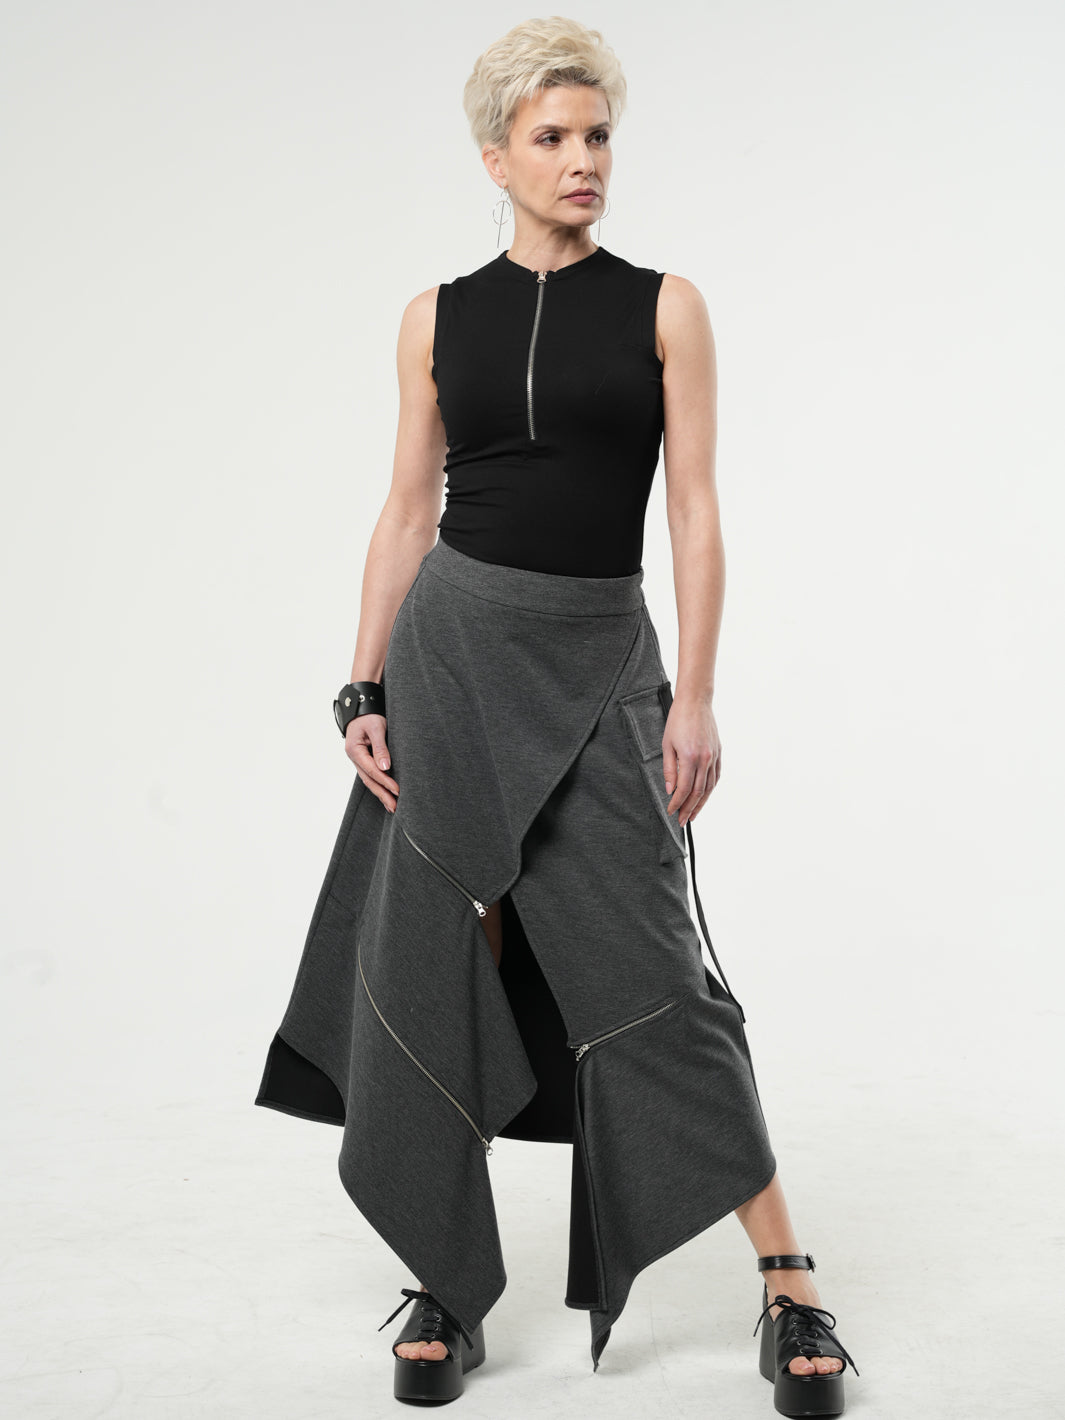 Asymmetric Gray Long Skirt with Zippers